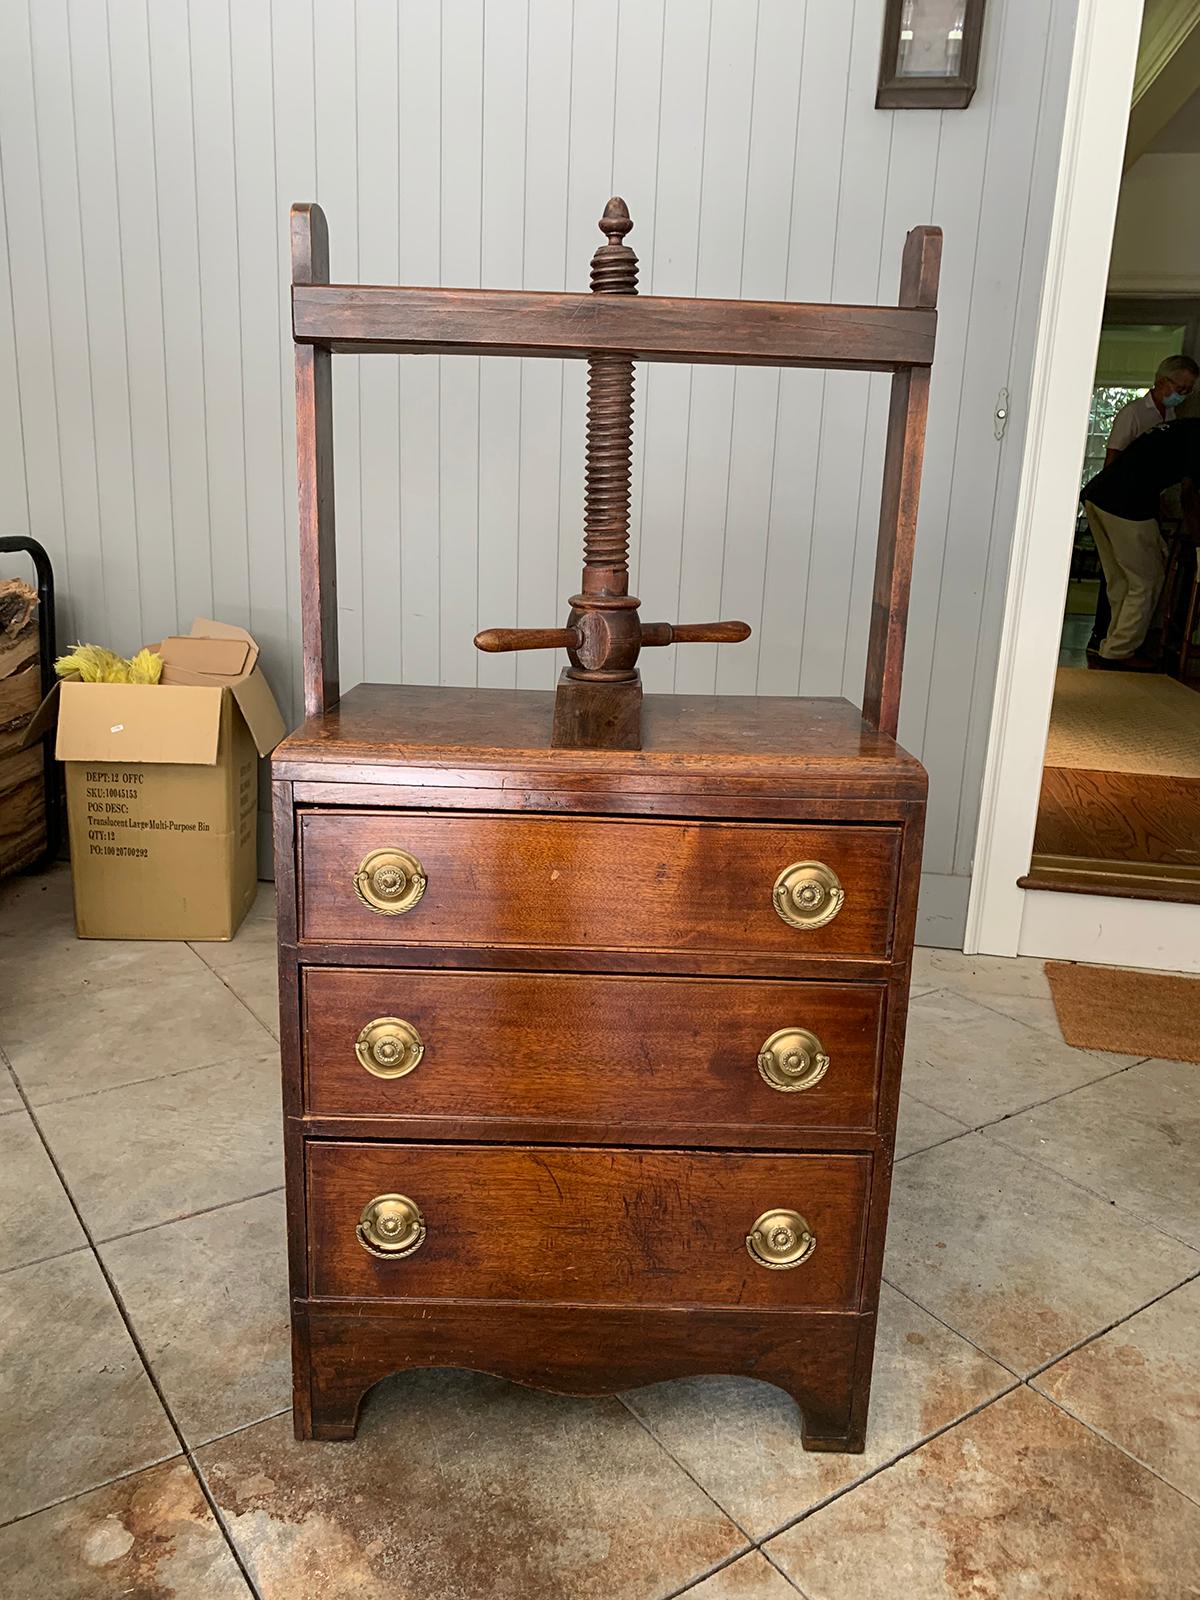 19th century English mahogany linen press with three drawers.